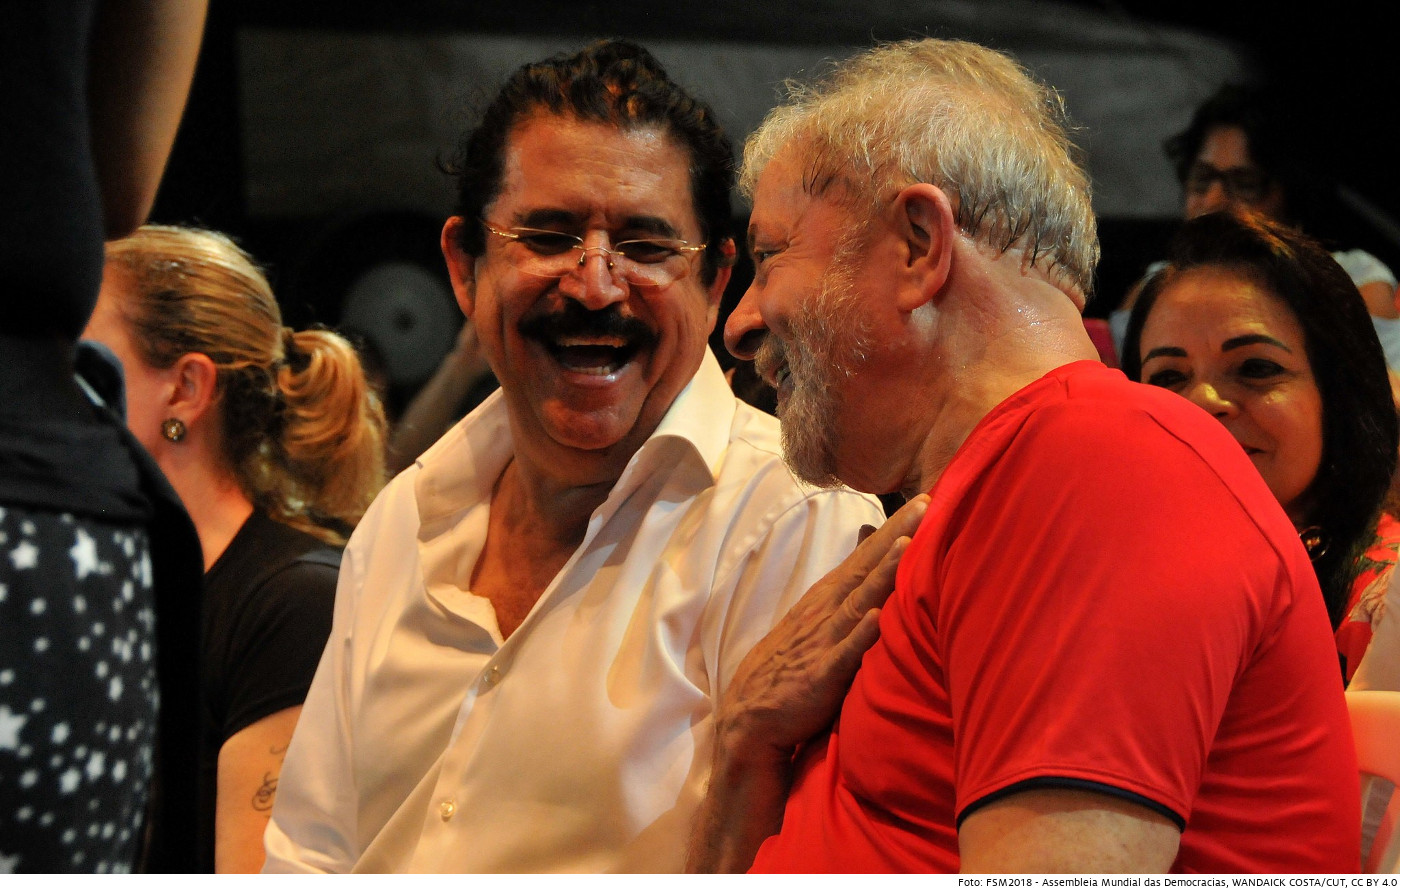 Der honduranische Ex-Präsident Manuel Zelaya (links) und Brasiliens ehemaliger Staatschef Lula da Silva (rechts) beim Weltsozialforum 2018 in Salvador de Bahía, Brasilien. Foto (Symbolbild): FSM2018​​​​​​​, WANDAICK COSTA/CUT, CC BY 4.0